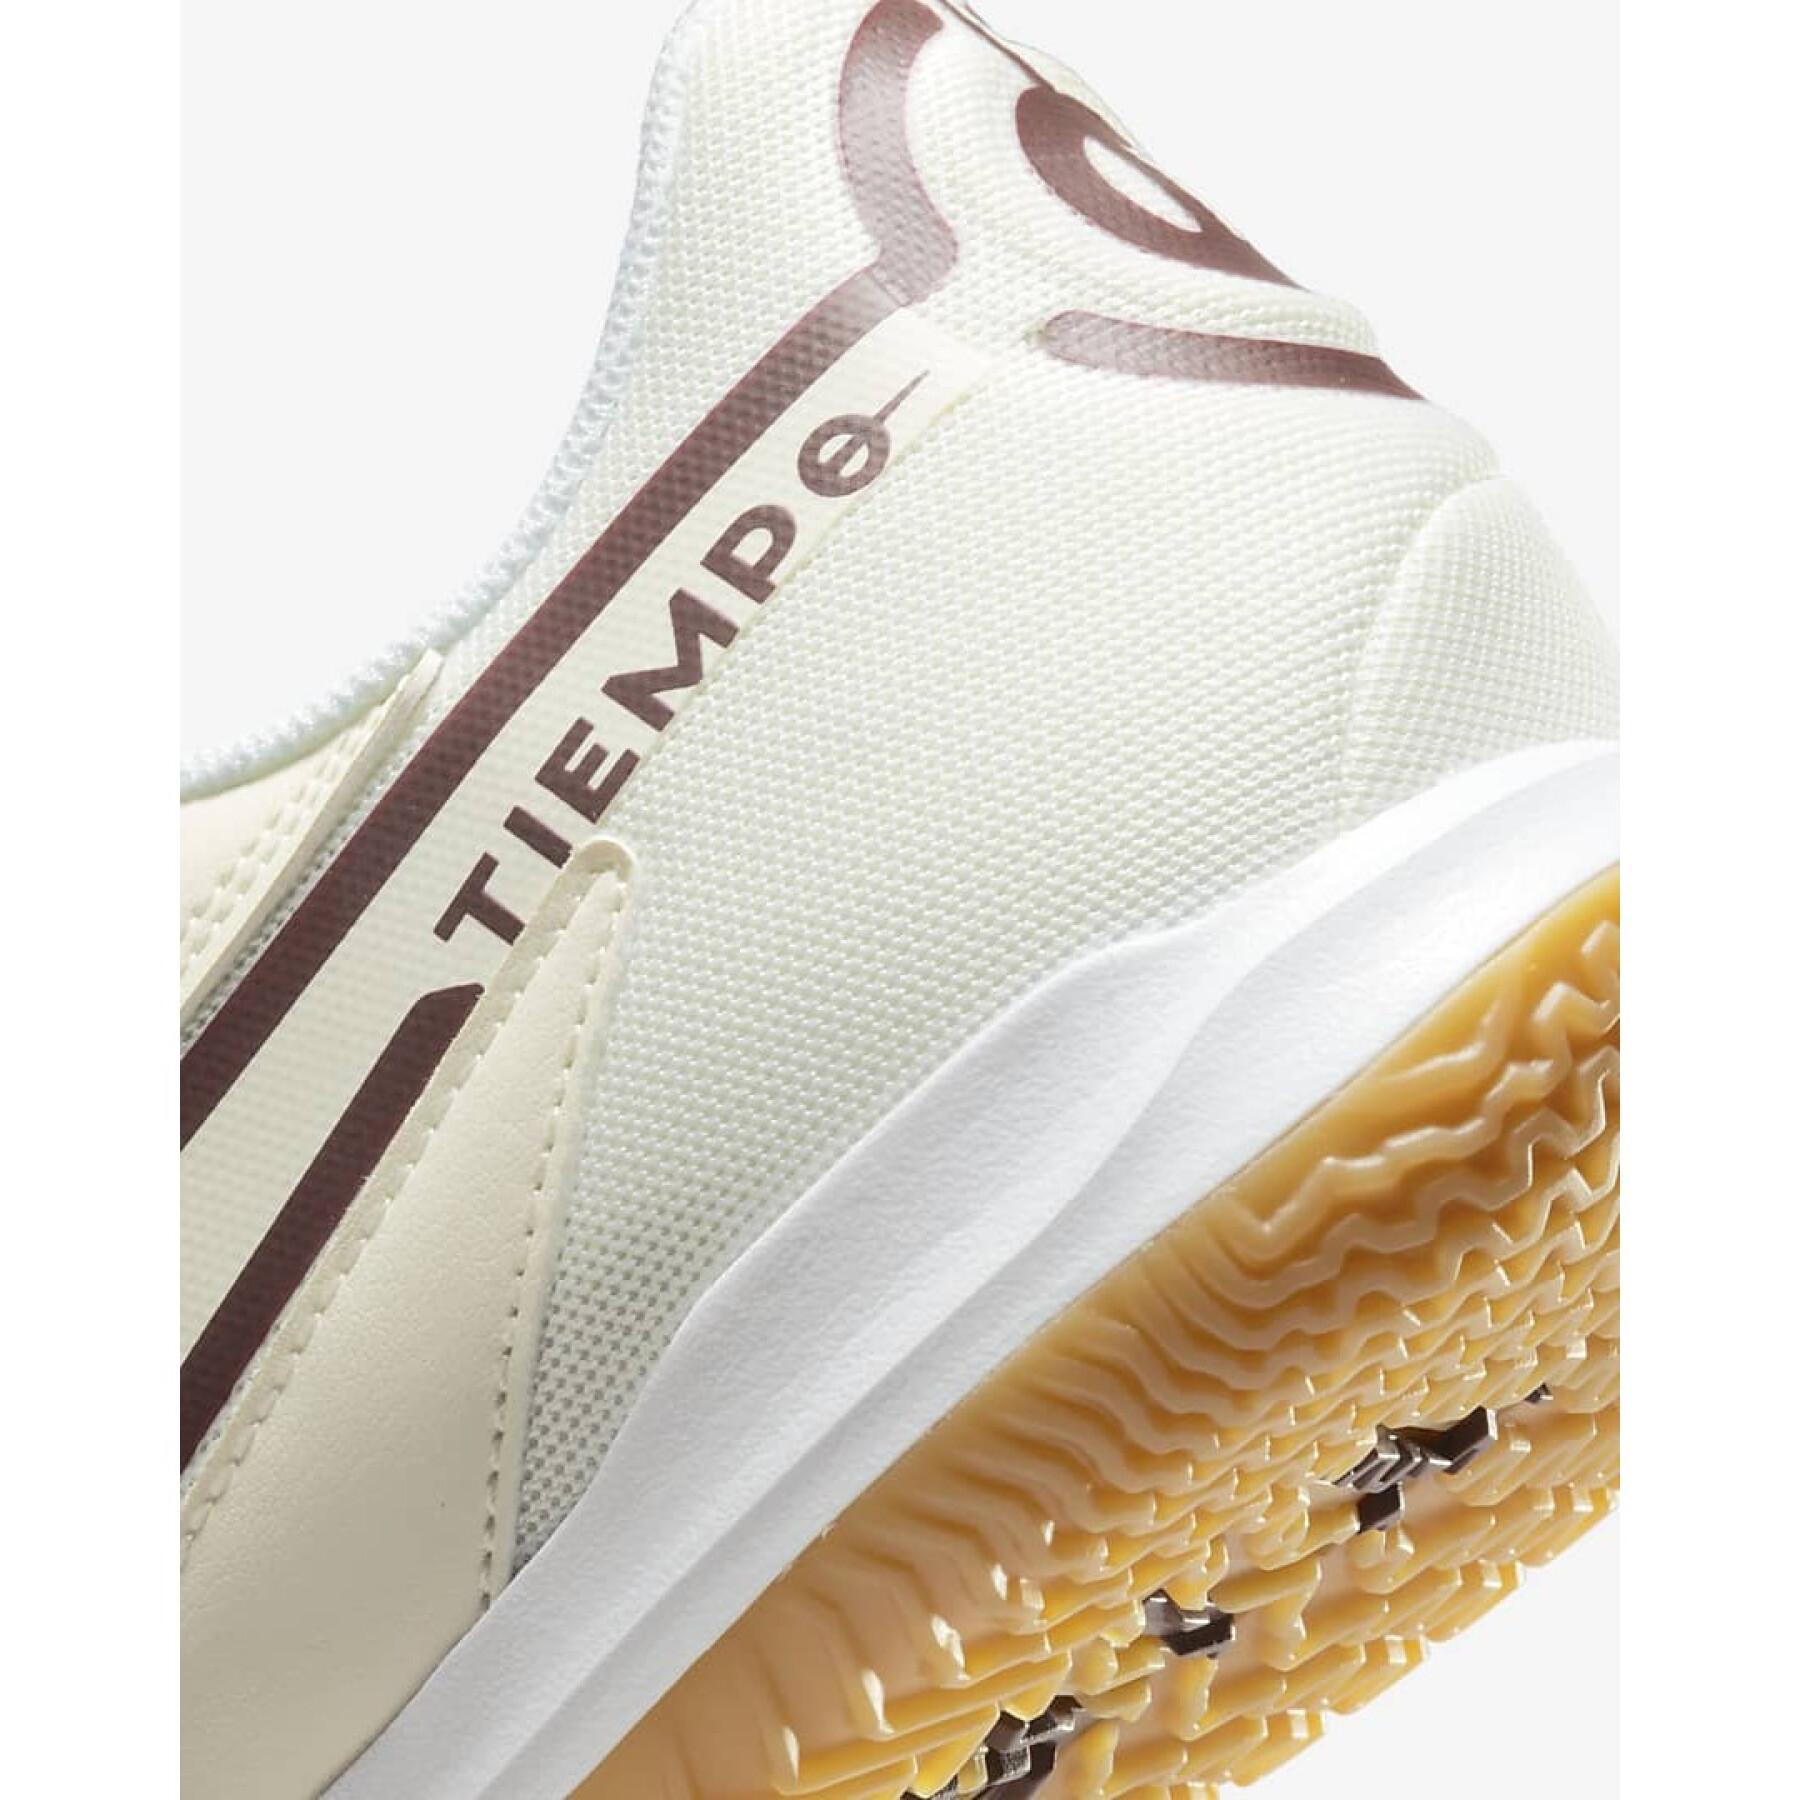 Chaussures de football Nike Tiempo Legend 9 Academy IC